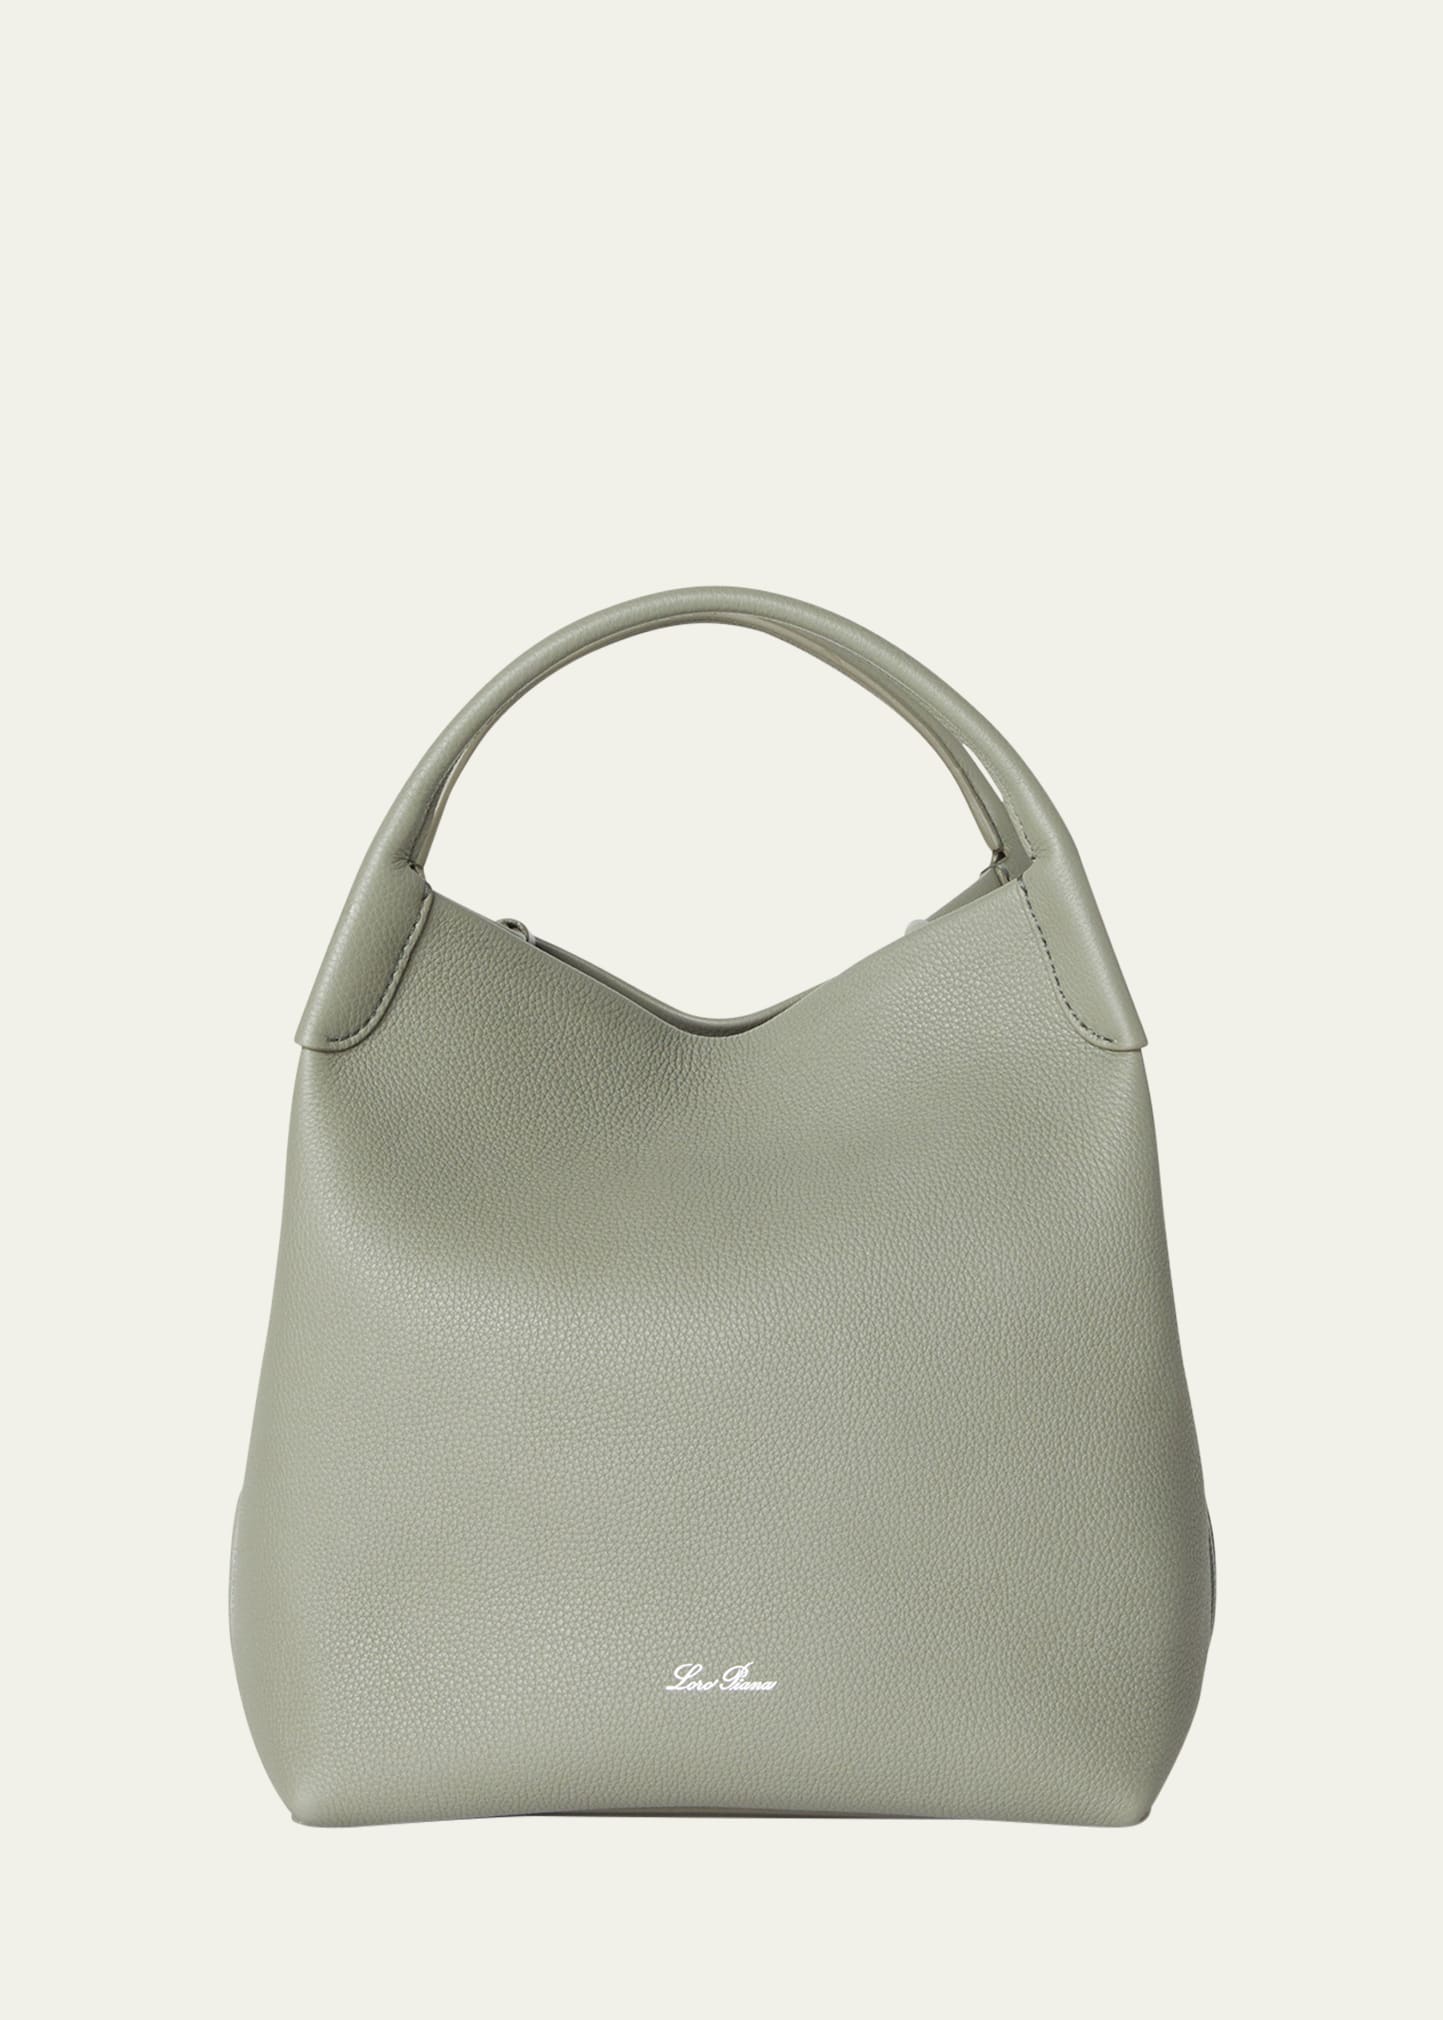 Loro Piana Leather Top Handle Bag In W0pd Cloud Sky